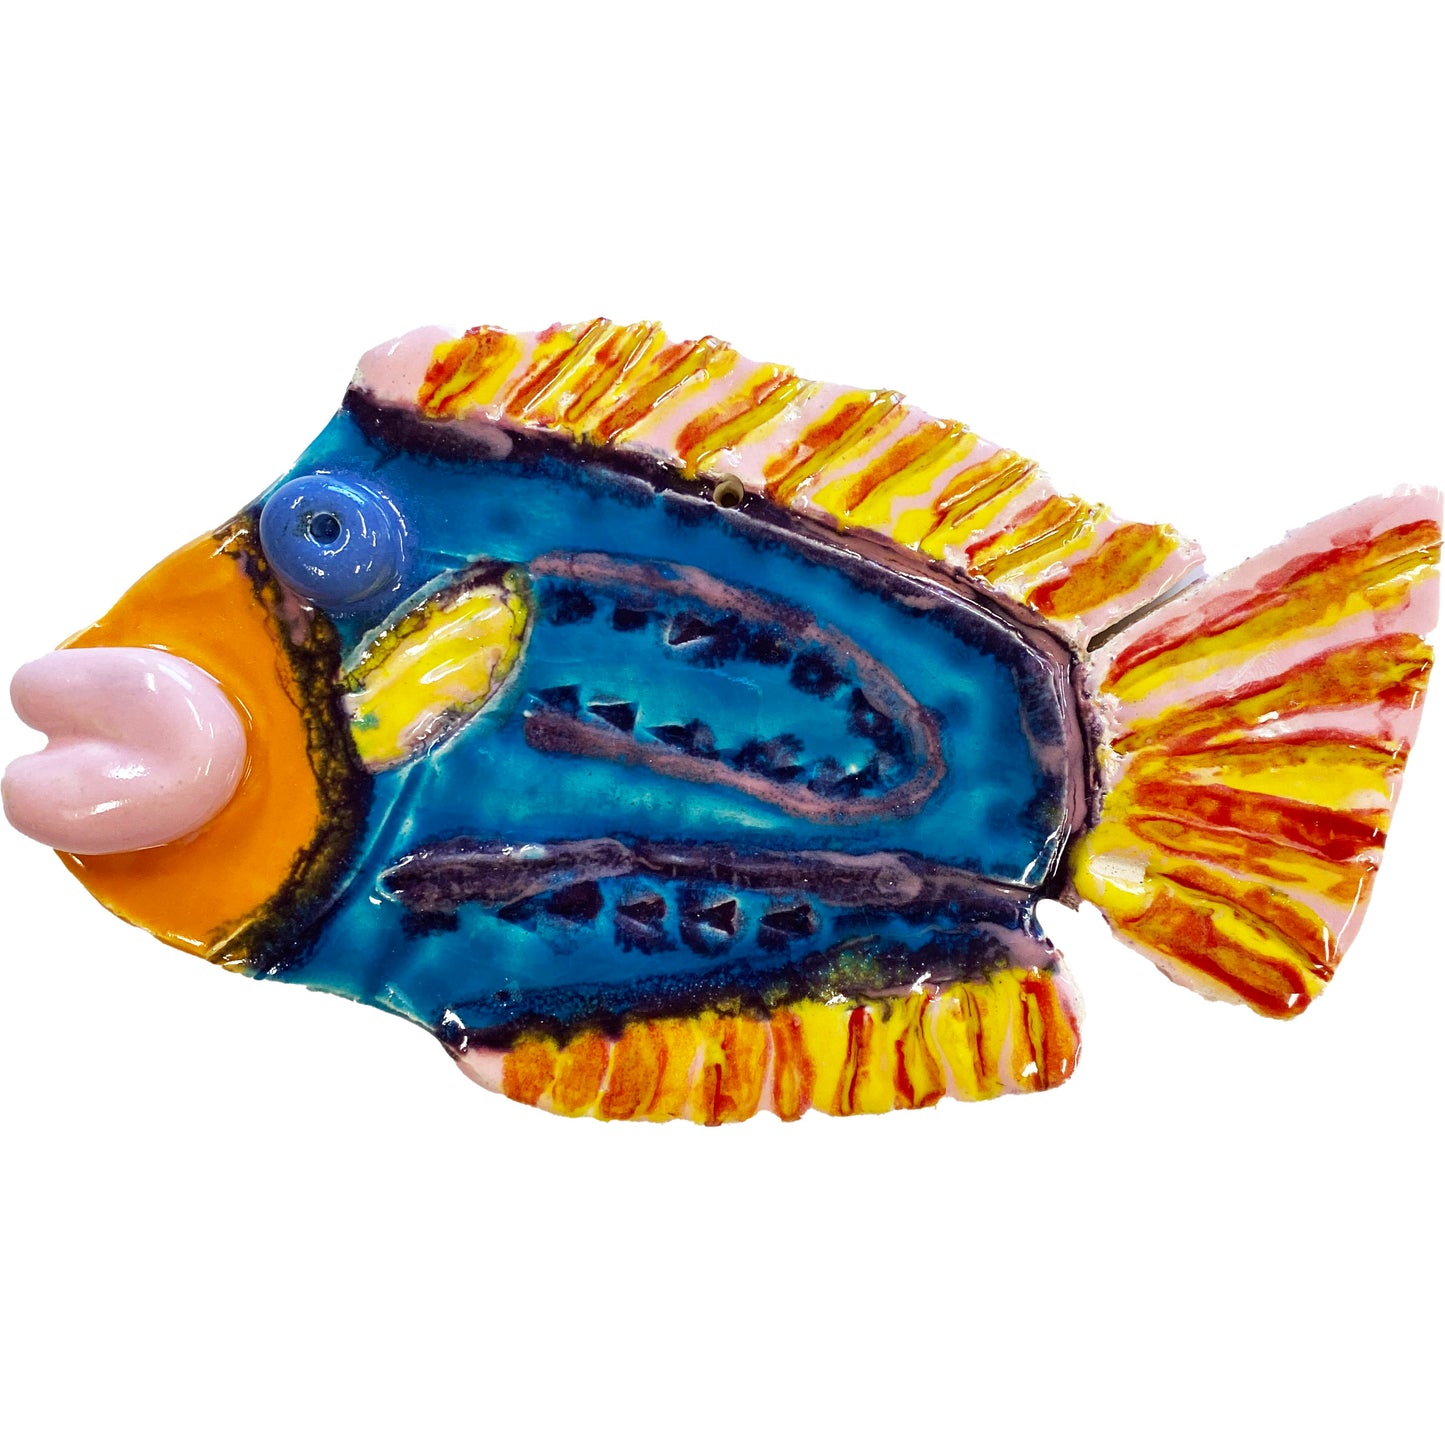 Ceramic Arts Handmade Clay Crafts Fresh Fish Glazed 6.5-inch x 4-inch by Cassandra Richardson